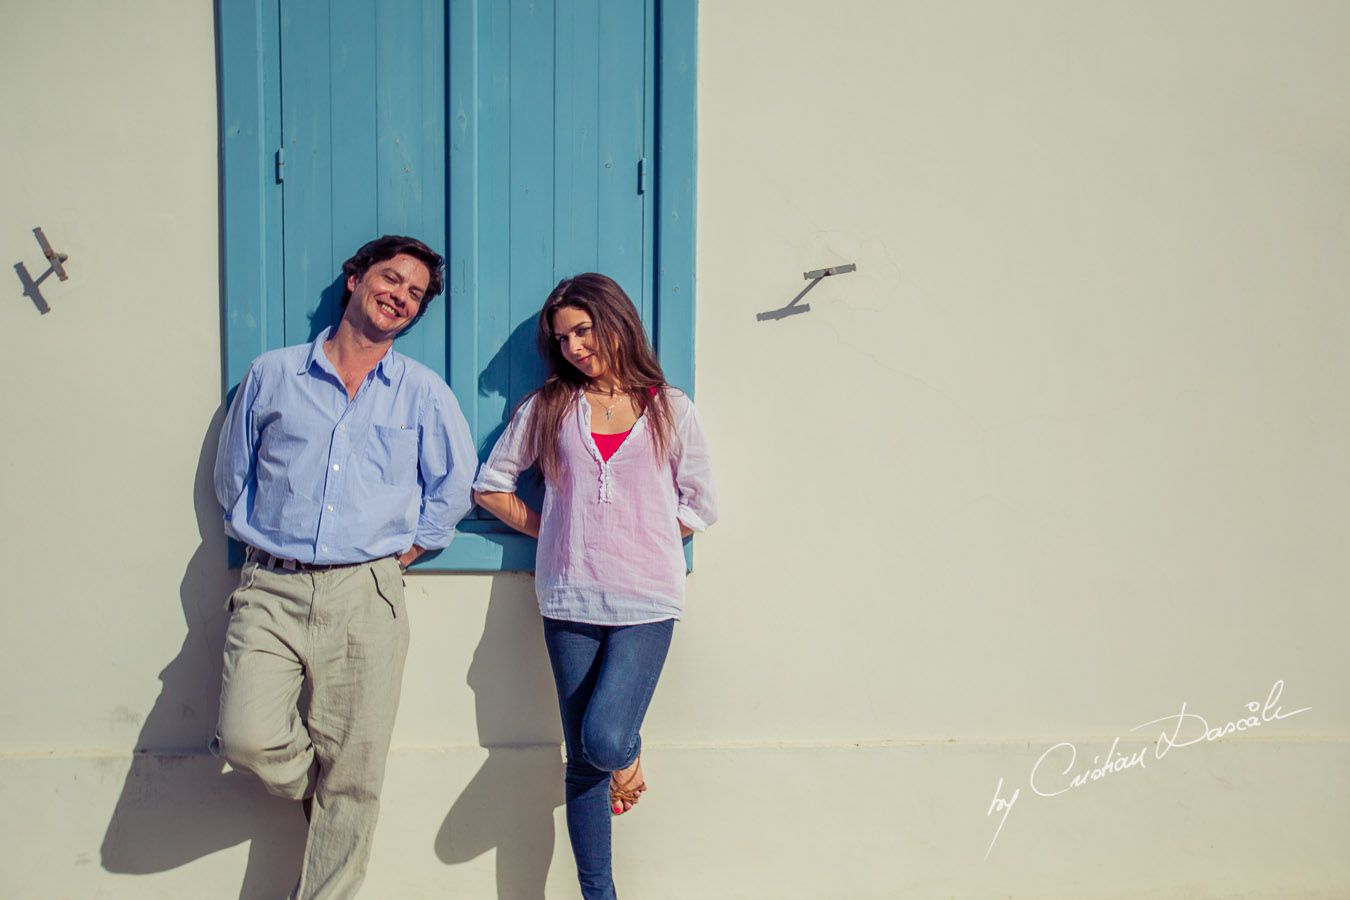 Engagement Photography - Justin & Irina. Cyprus Photographer: Cristian Dascalu